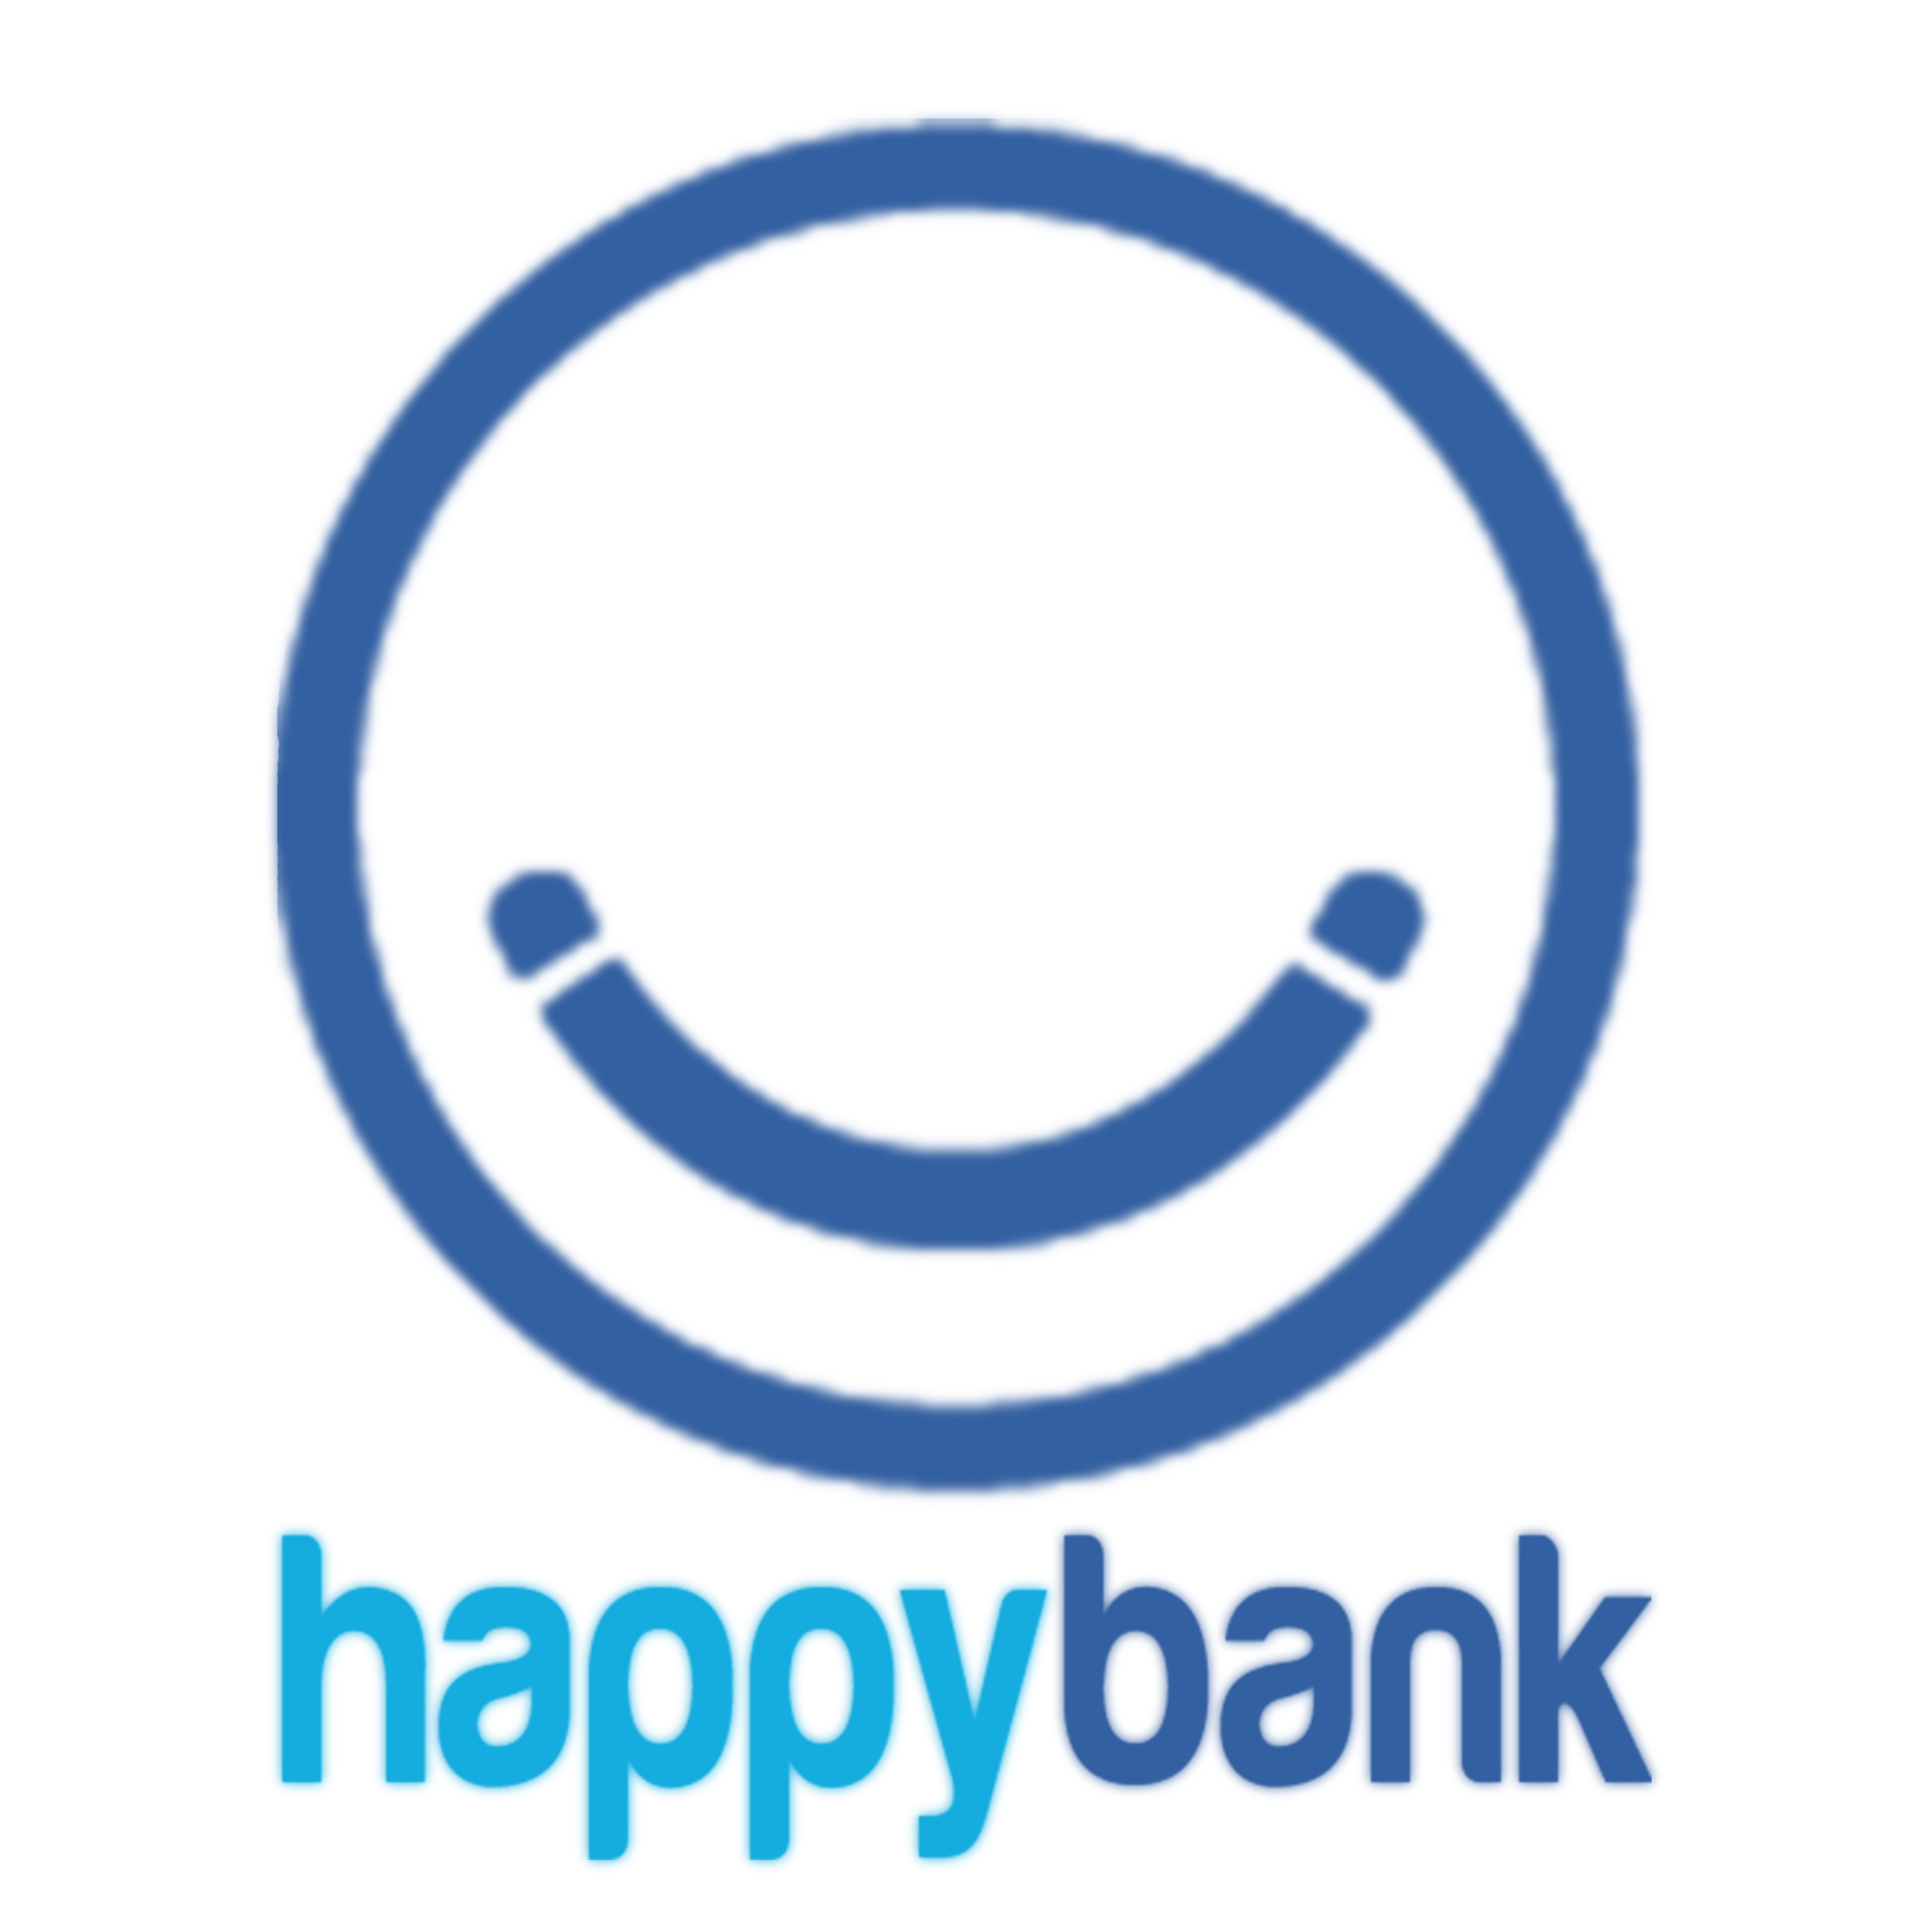 happybank